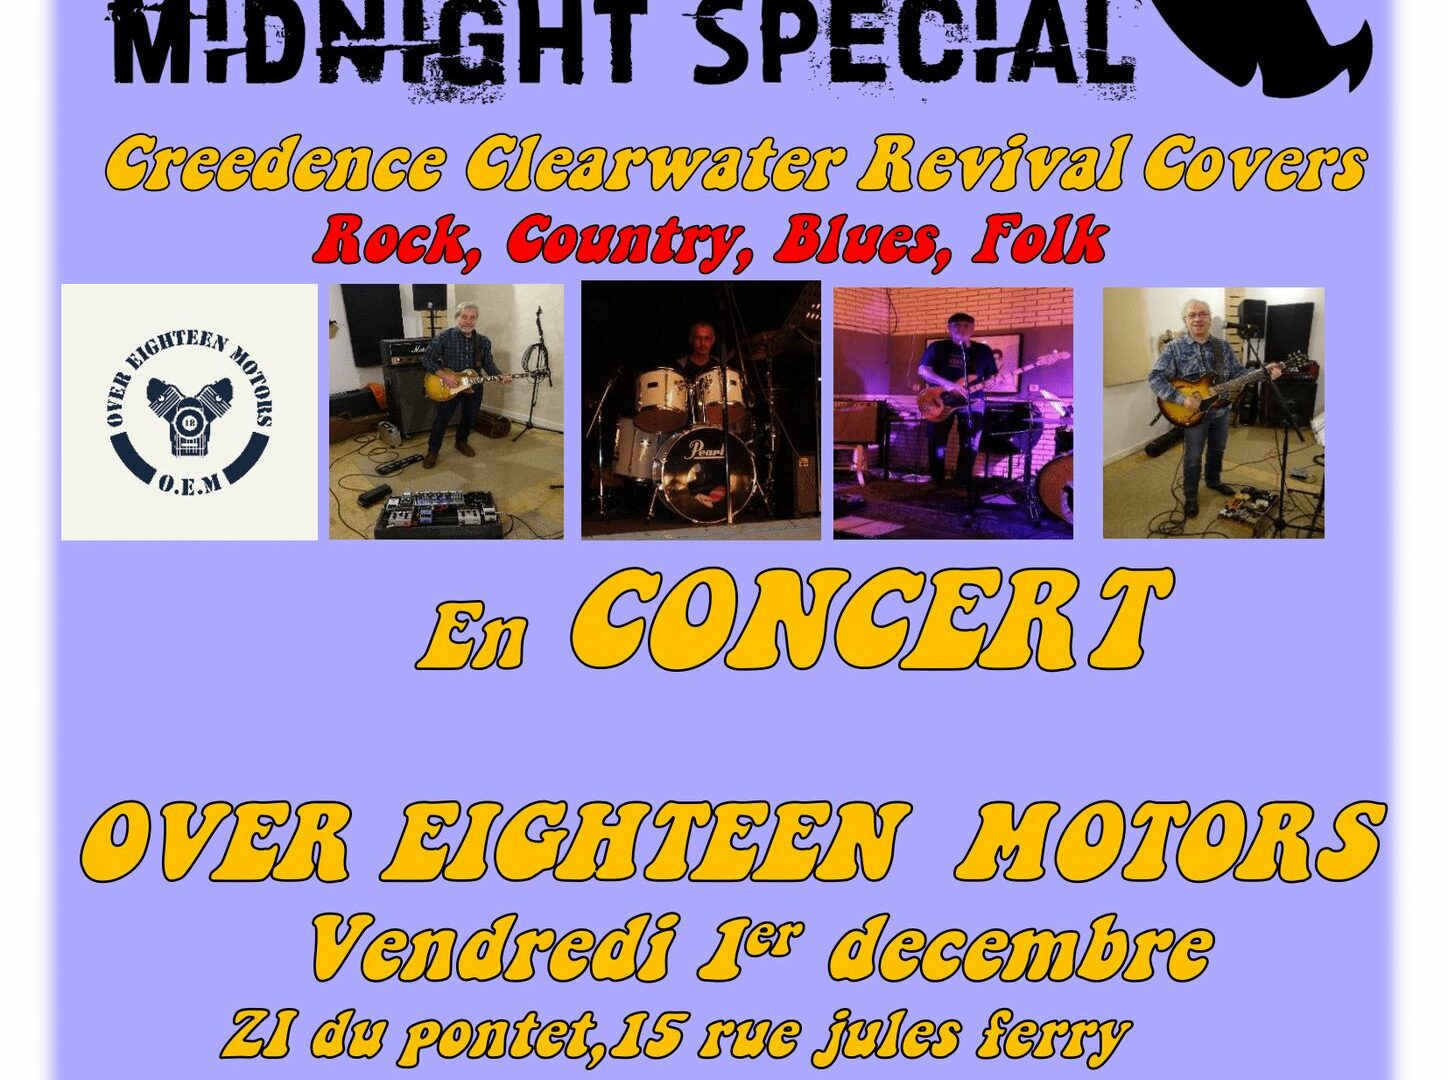 Concert Midnight Special